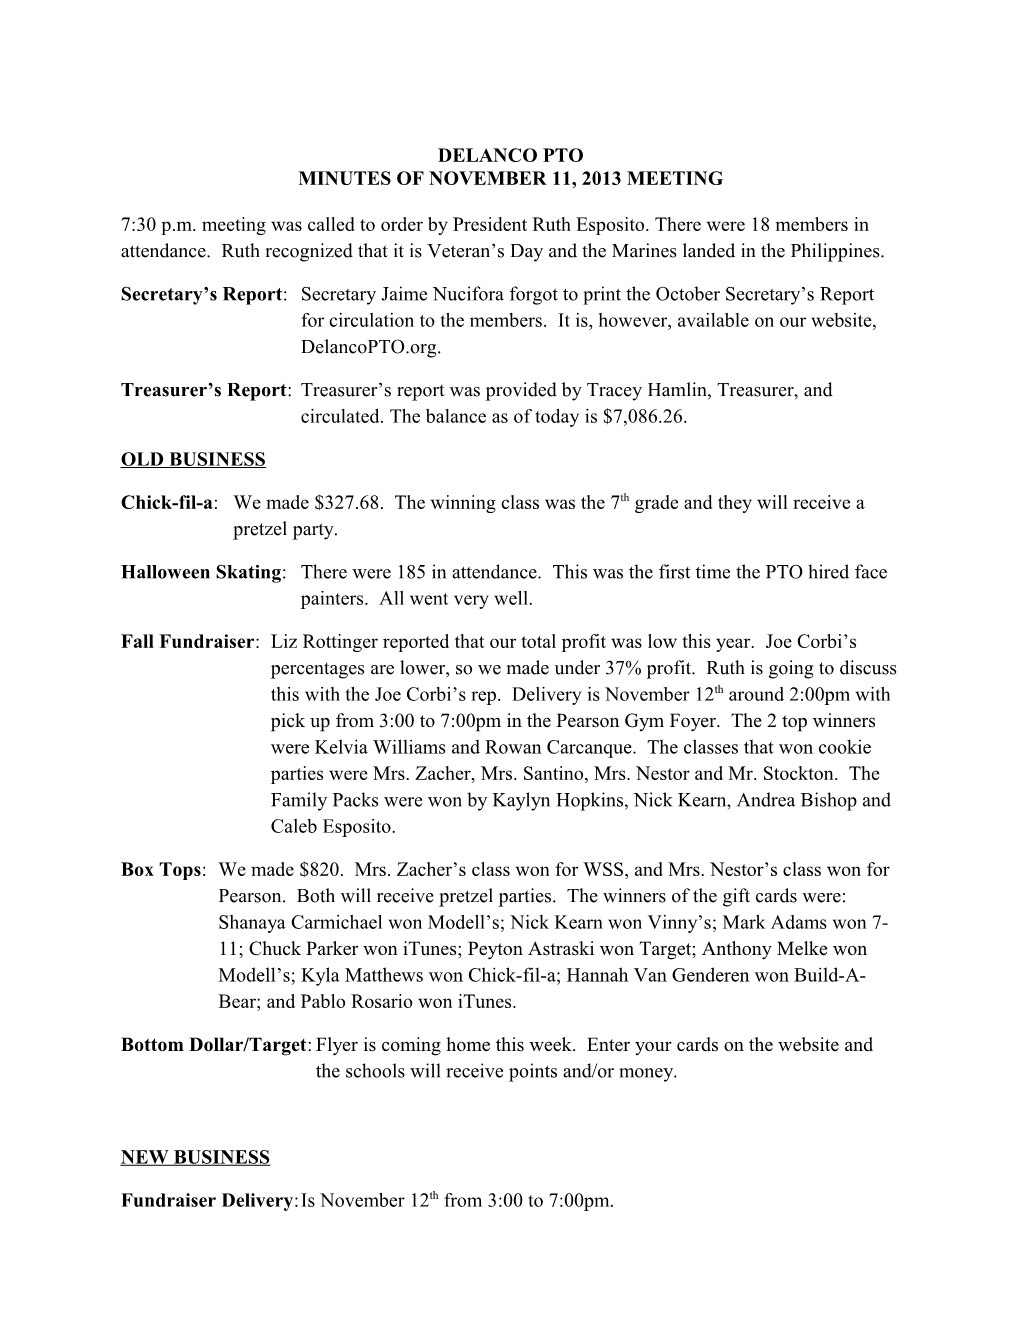 Minutes of November 11, 2013 Meeting